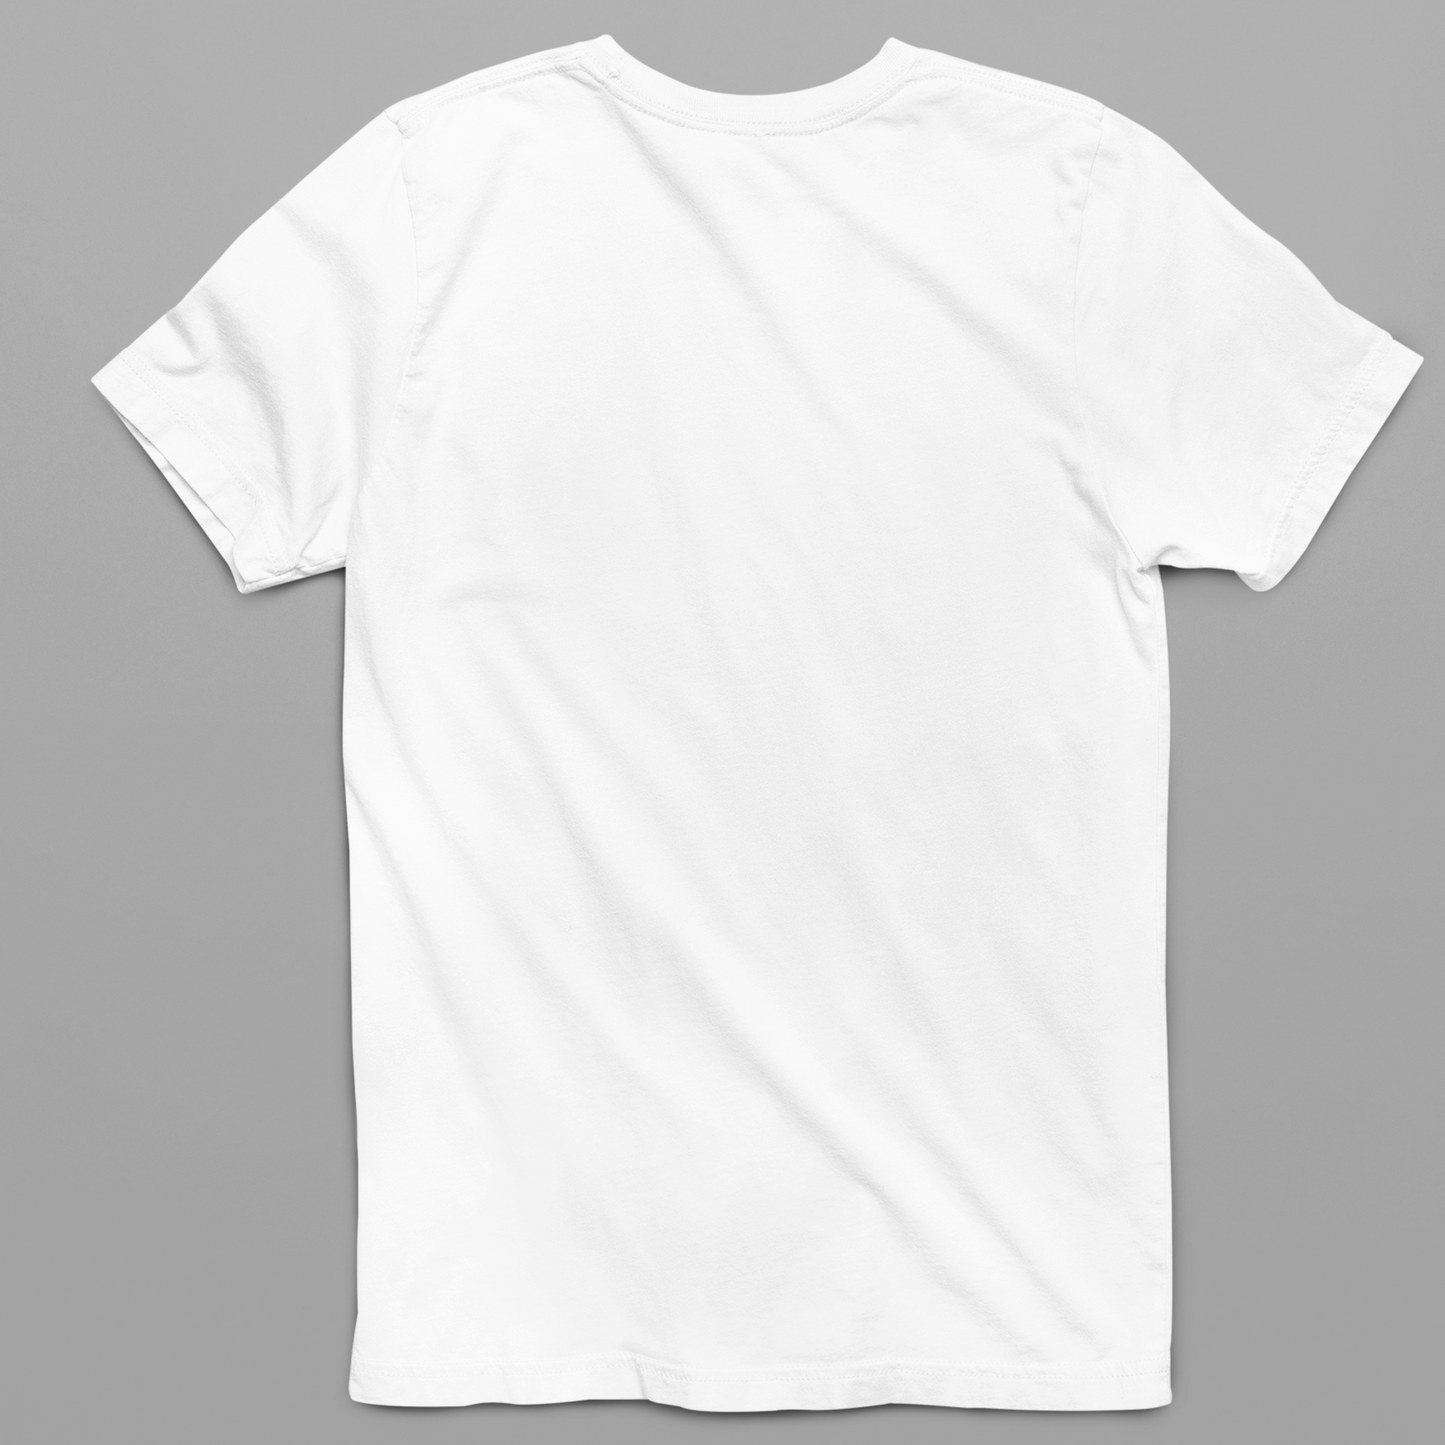 My Life Printed Round Neck Cotton T-Shirt - White